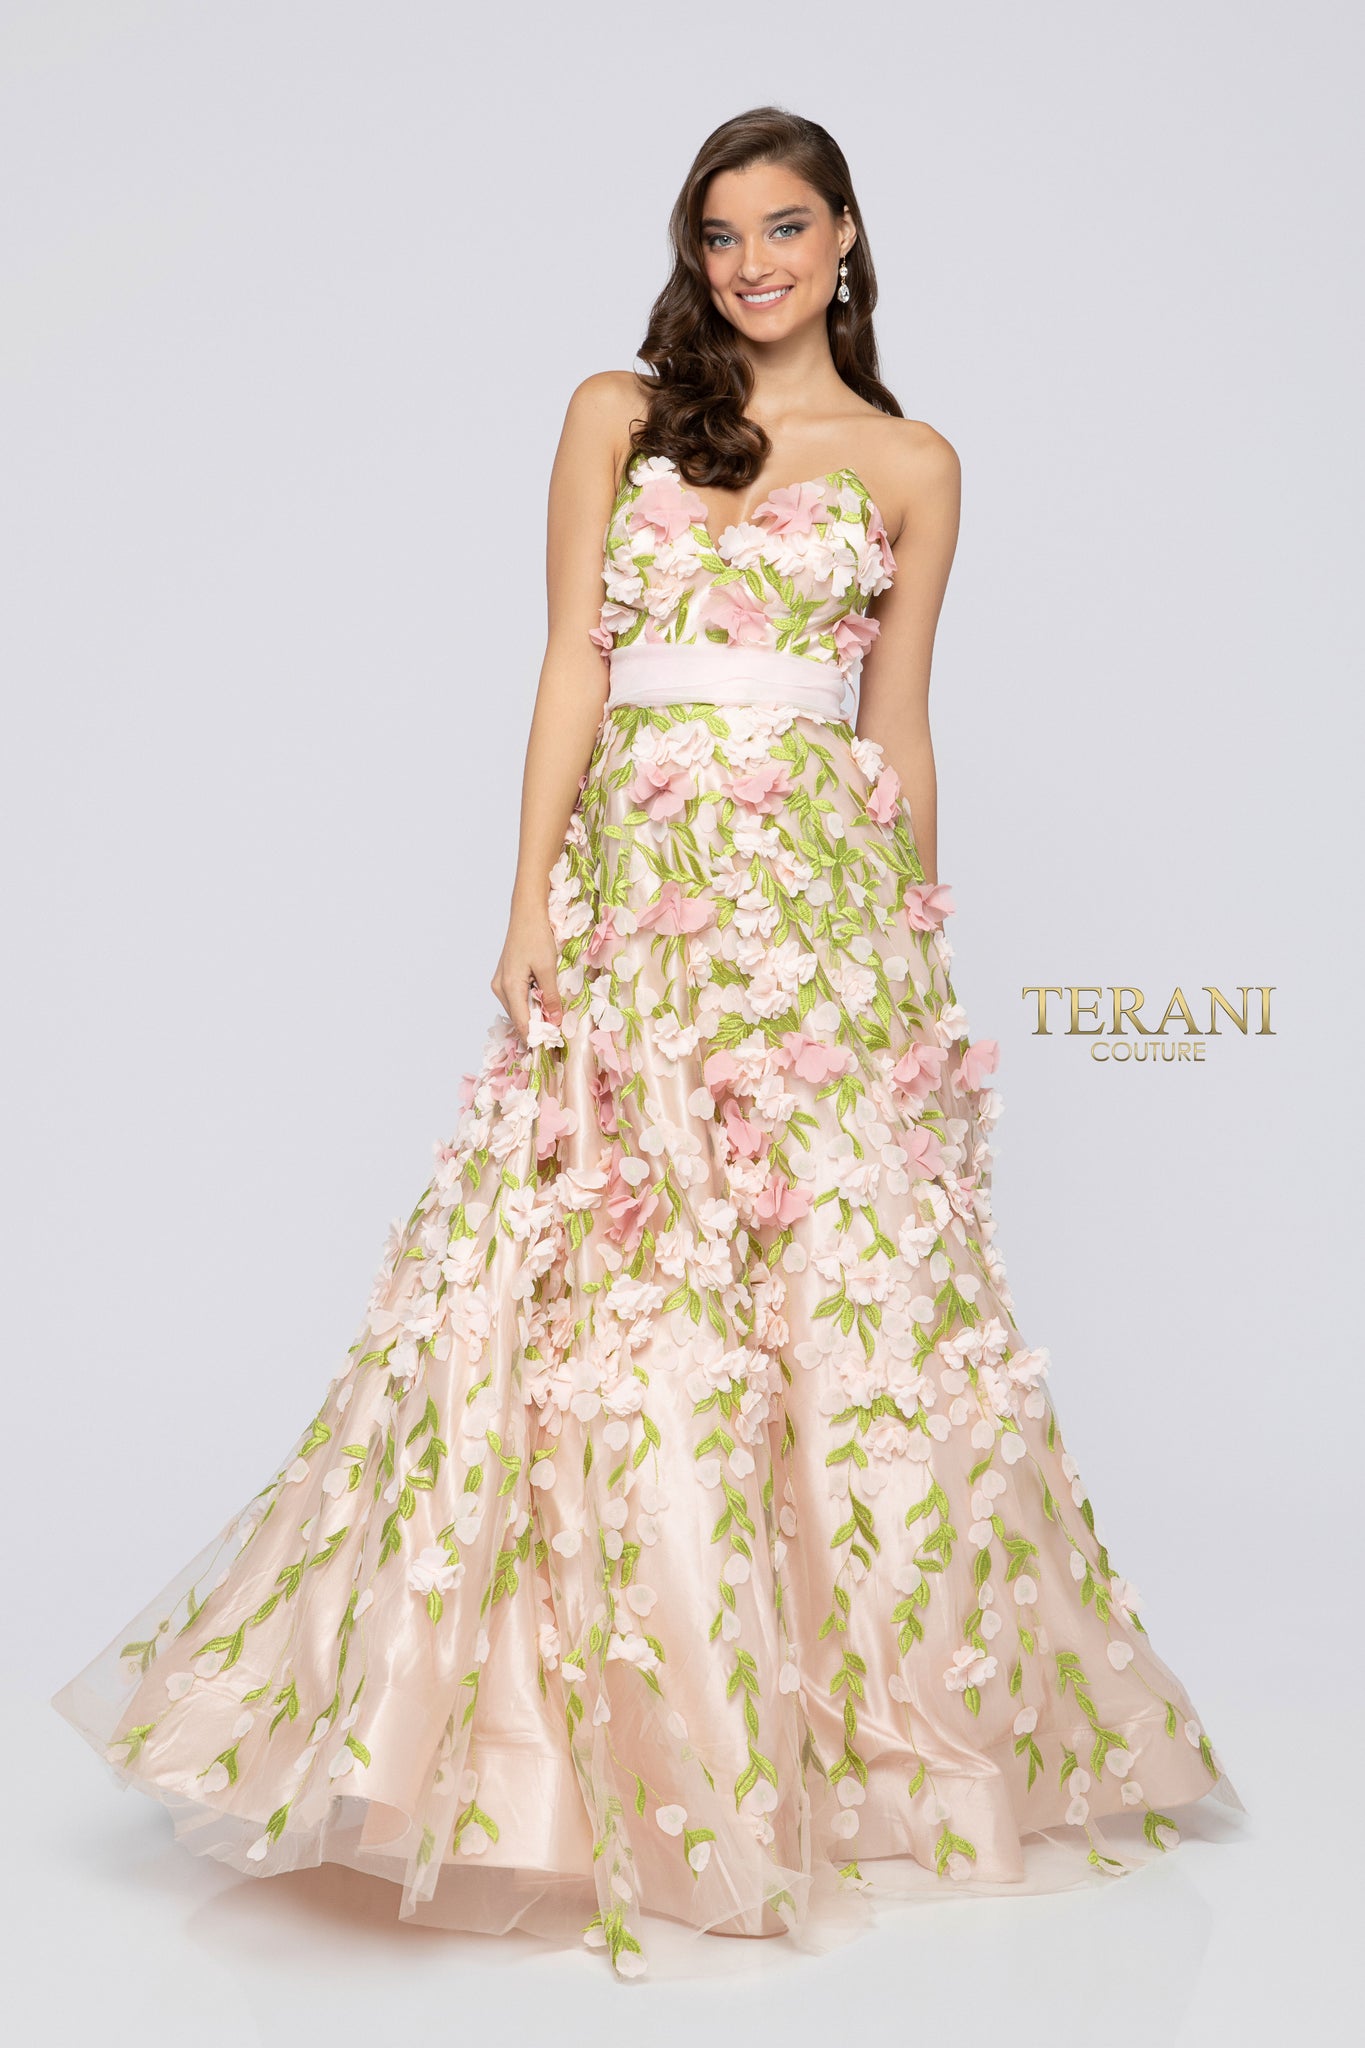 TERANI COUTURE 1911P8546 Dress